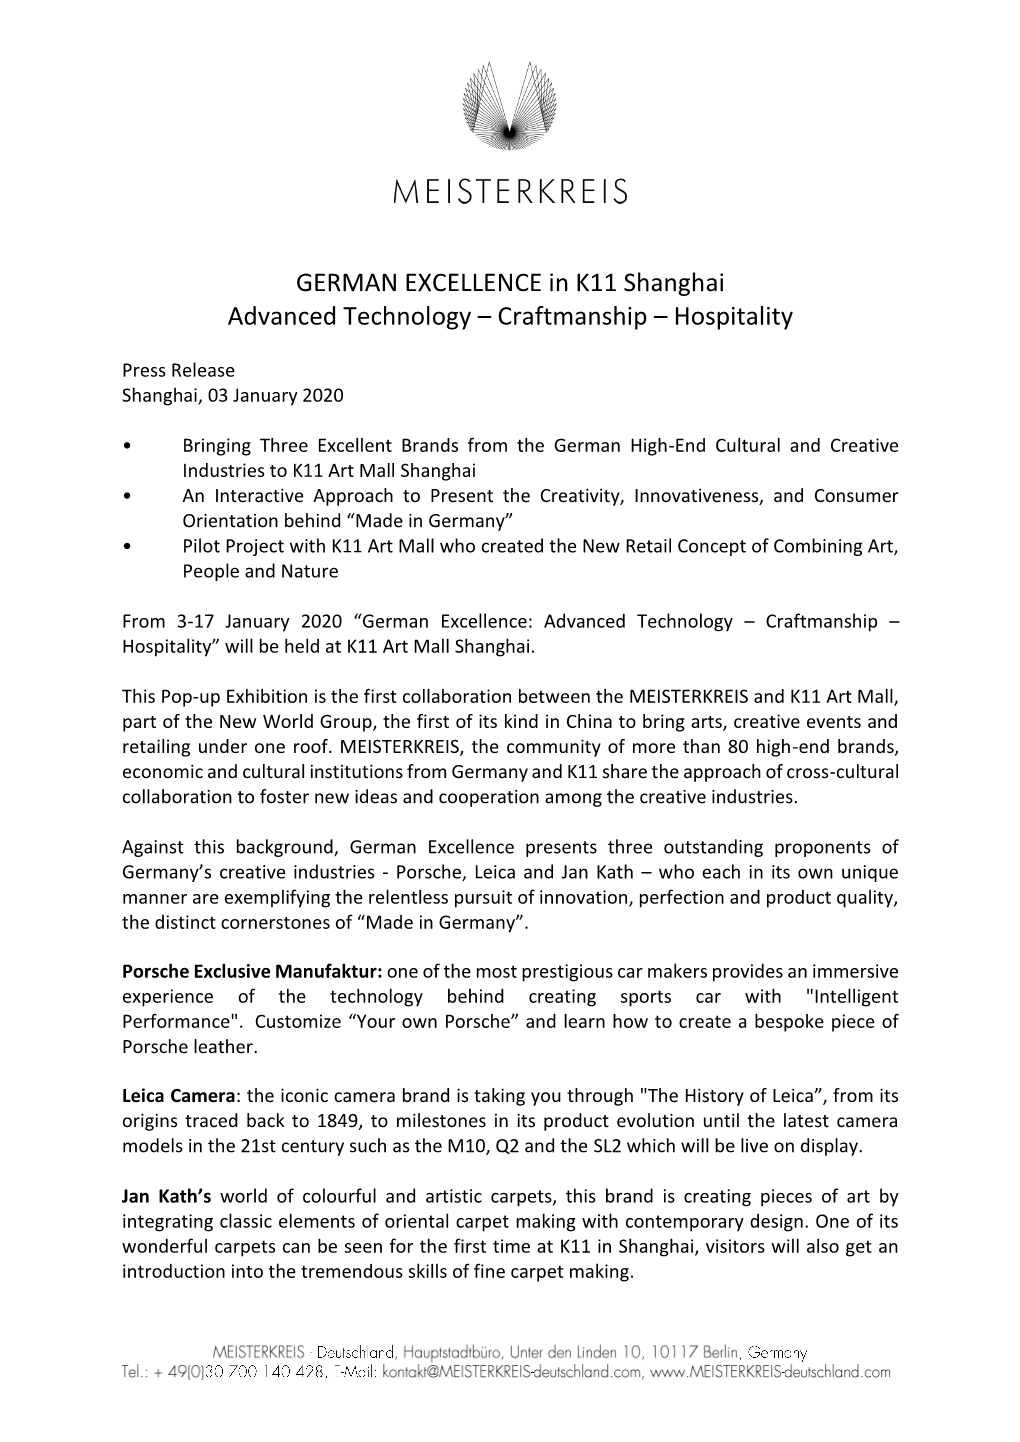 GERMAN EXCELLENCE in K11 Shanghai Advanced Technology – Craftmanship – Hospitality